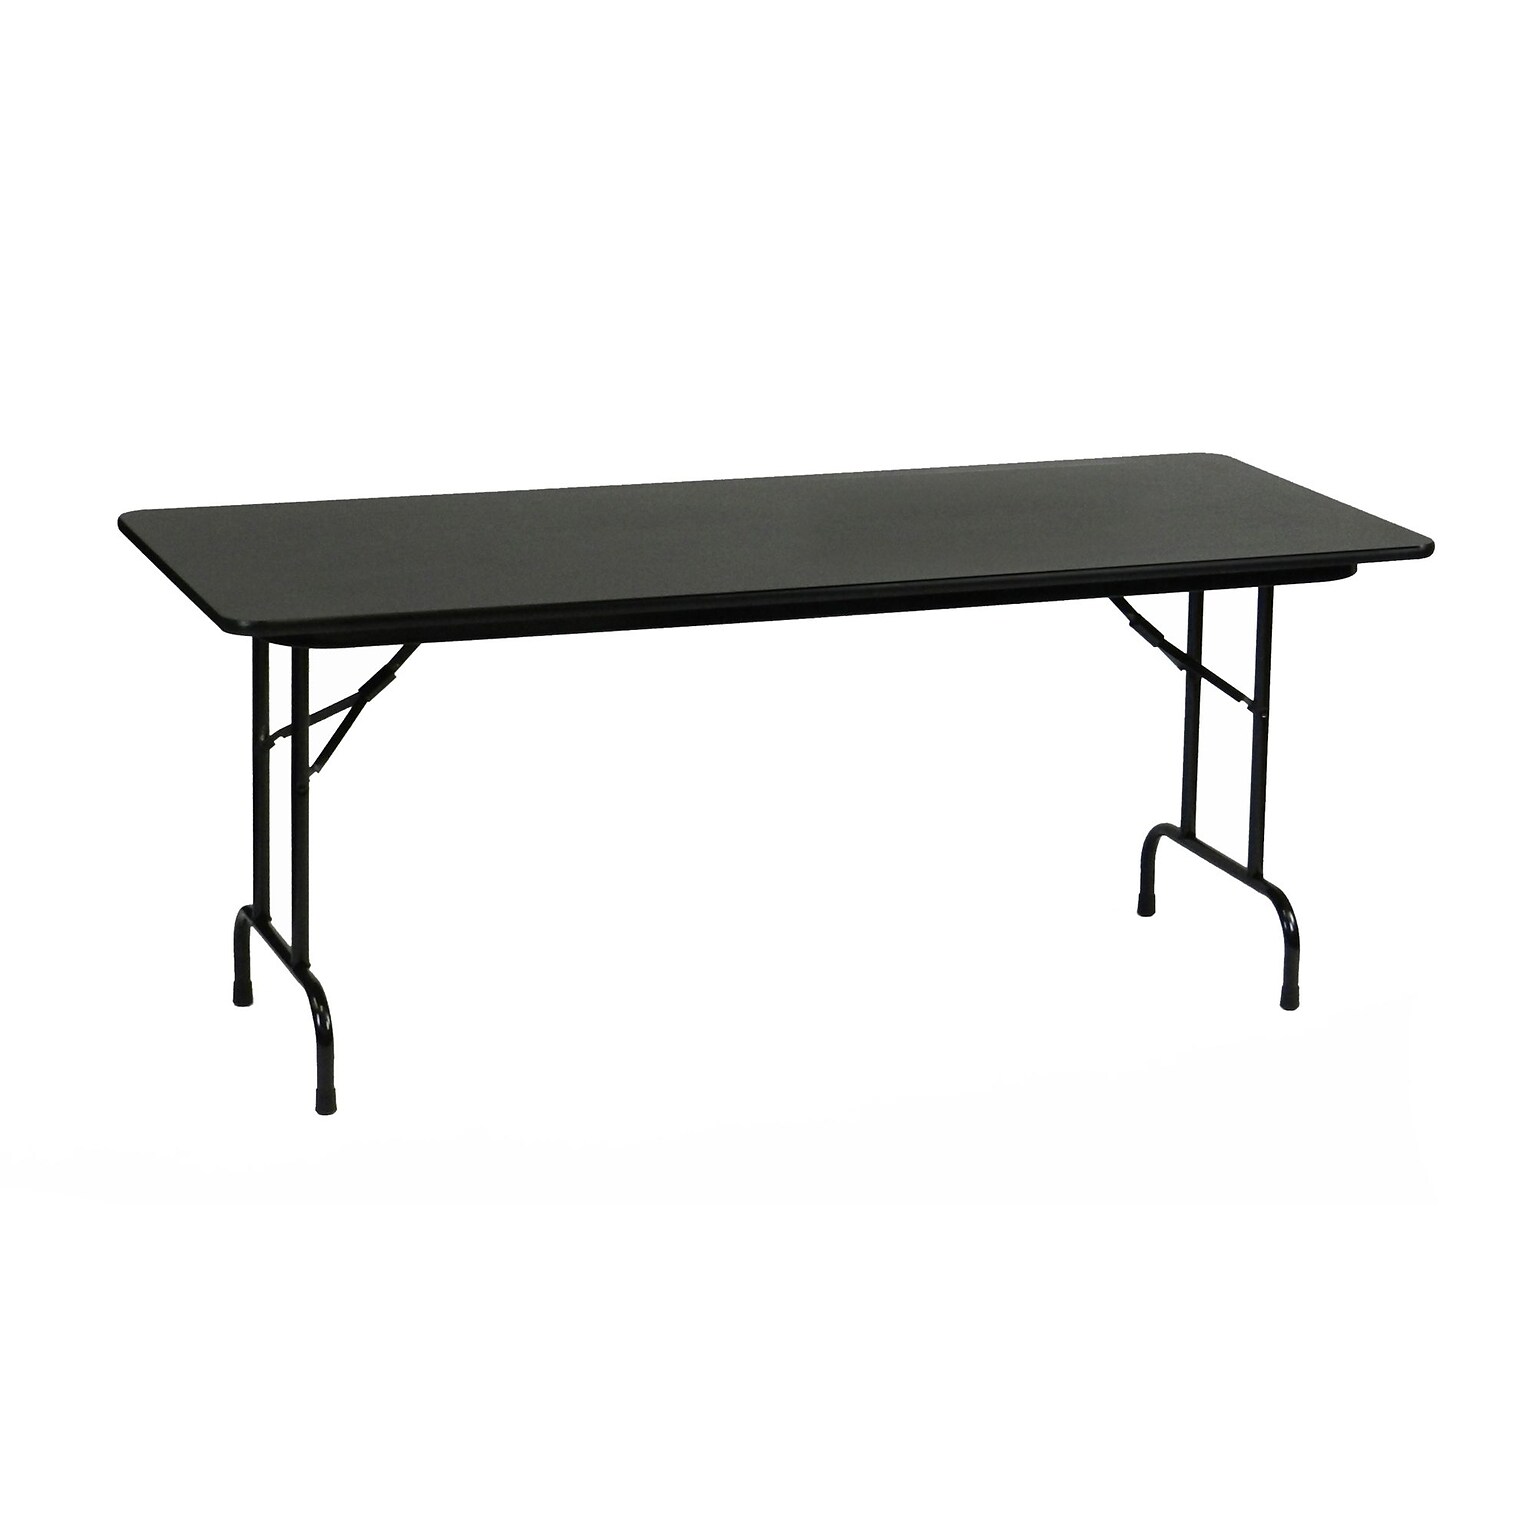 Correll 96-inch Metal, Particle Board & Laminate High Pressure Top Folding Table, Black Granite